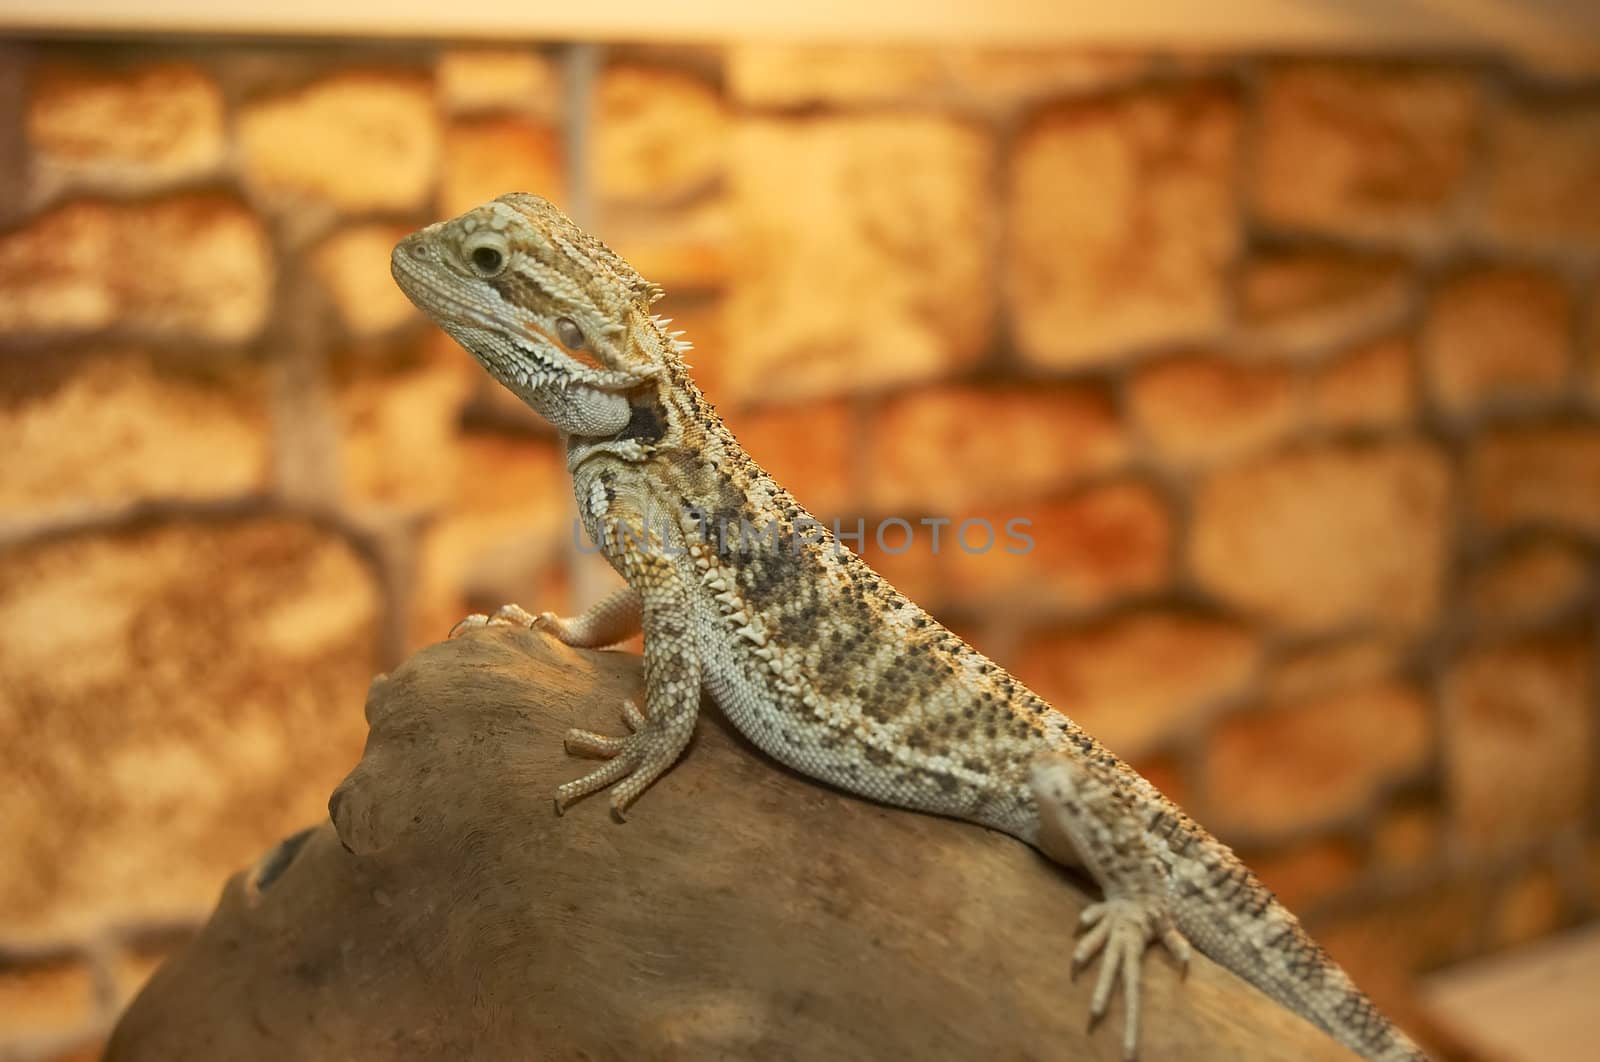 The lizard in a terrarium by eglazov